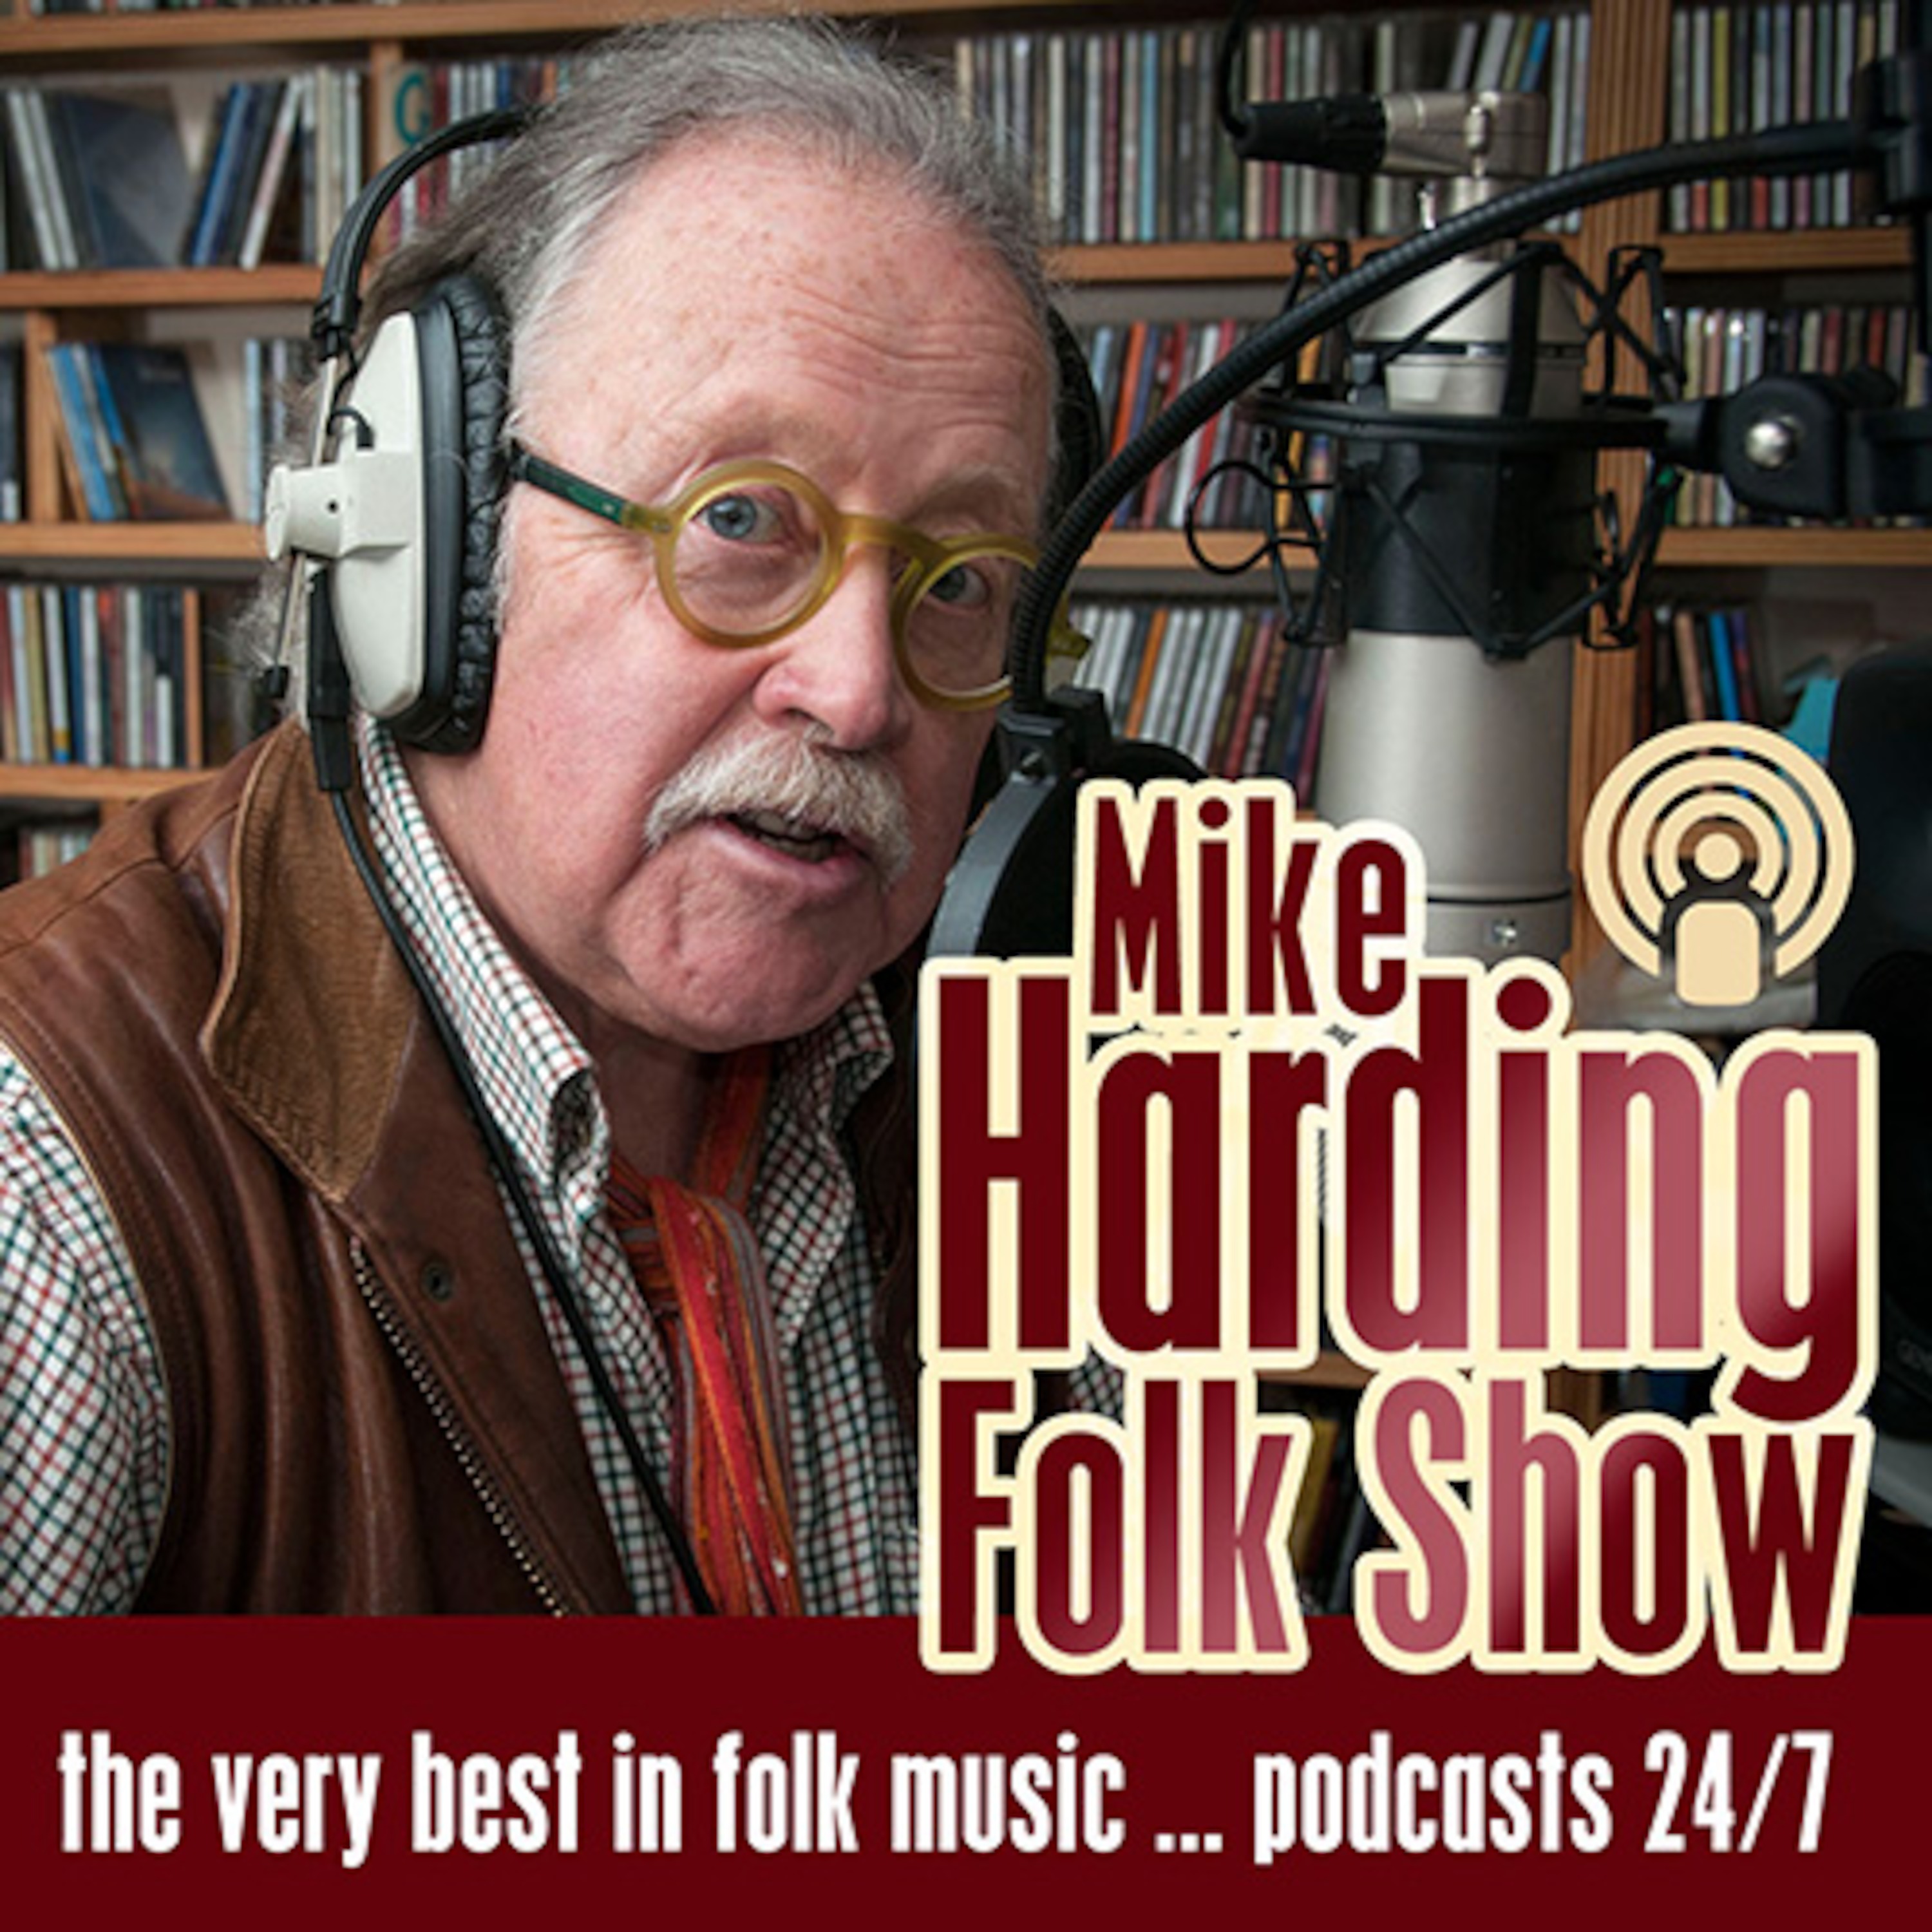 Mike Harding Folk Show 114